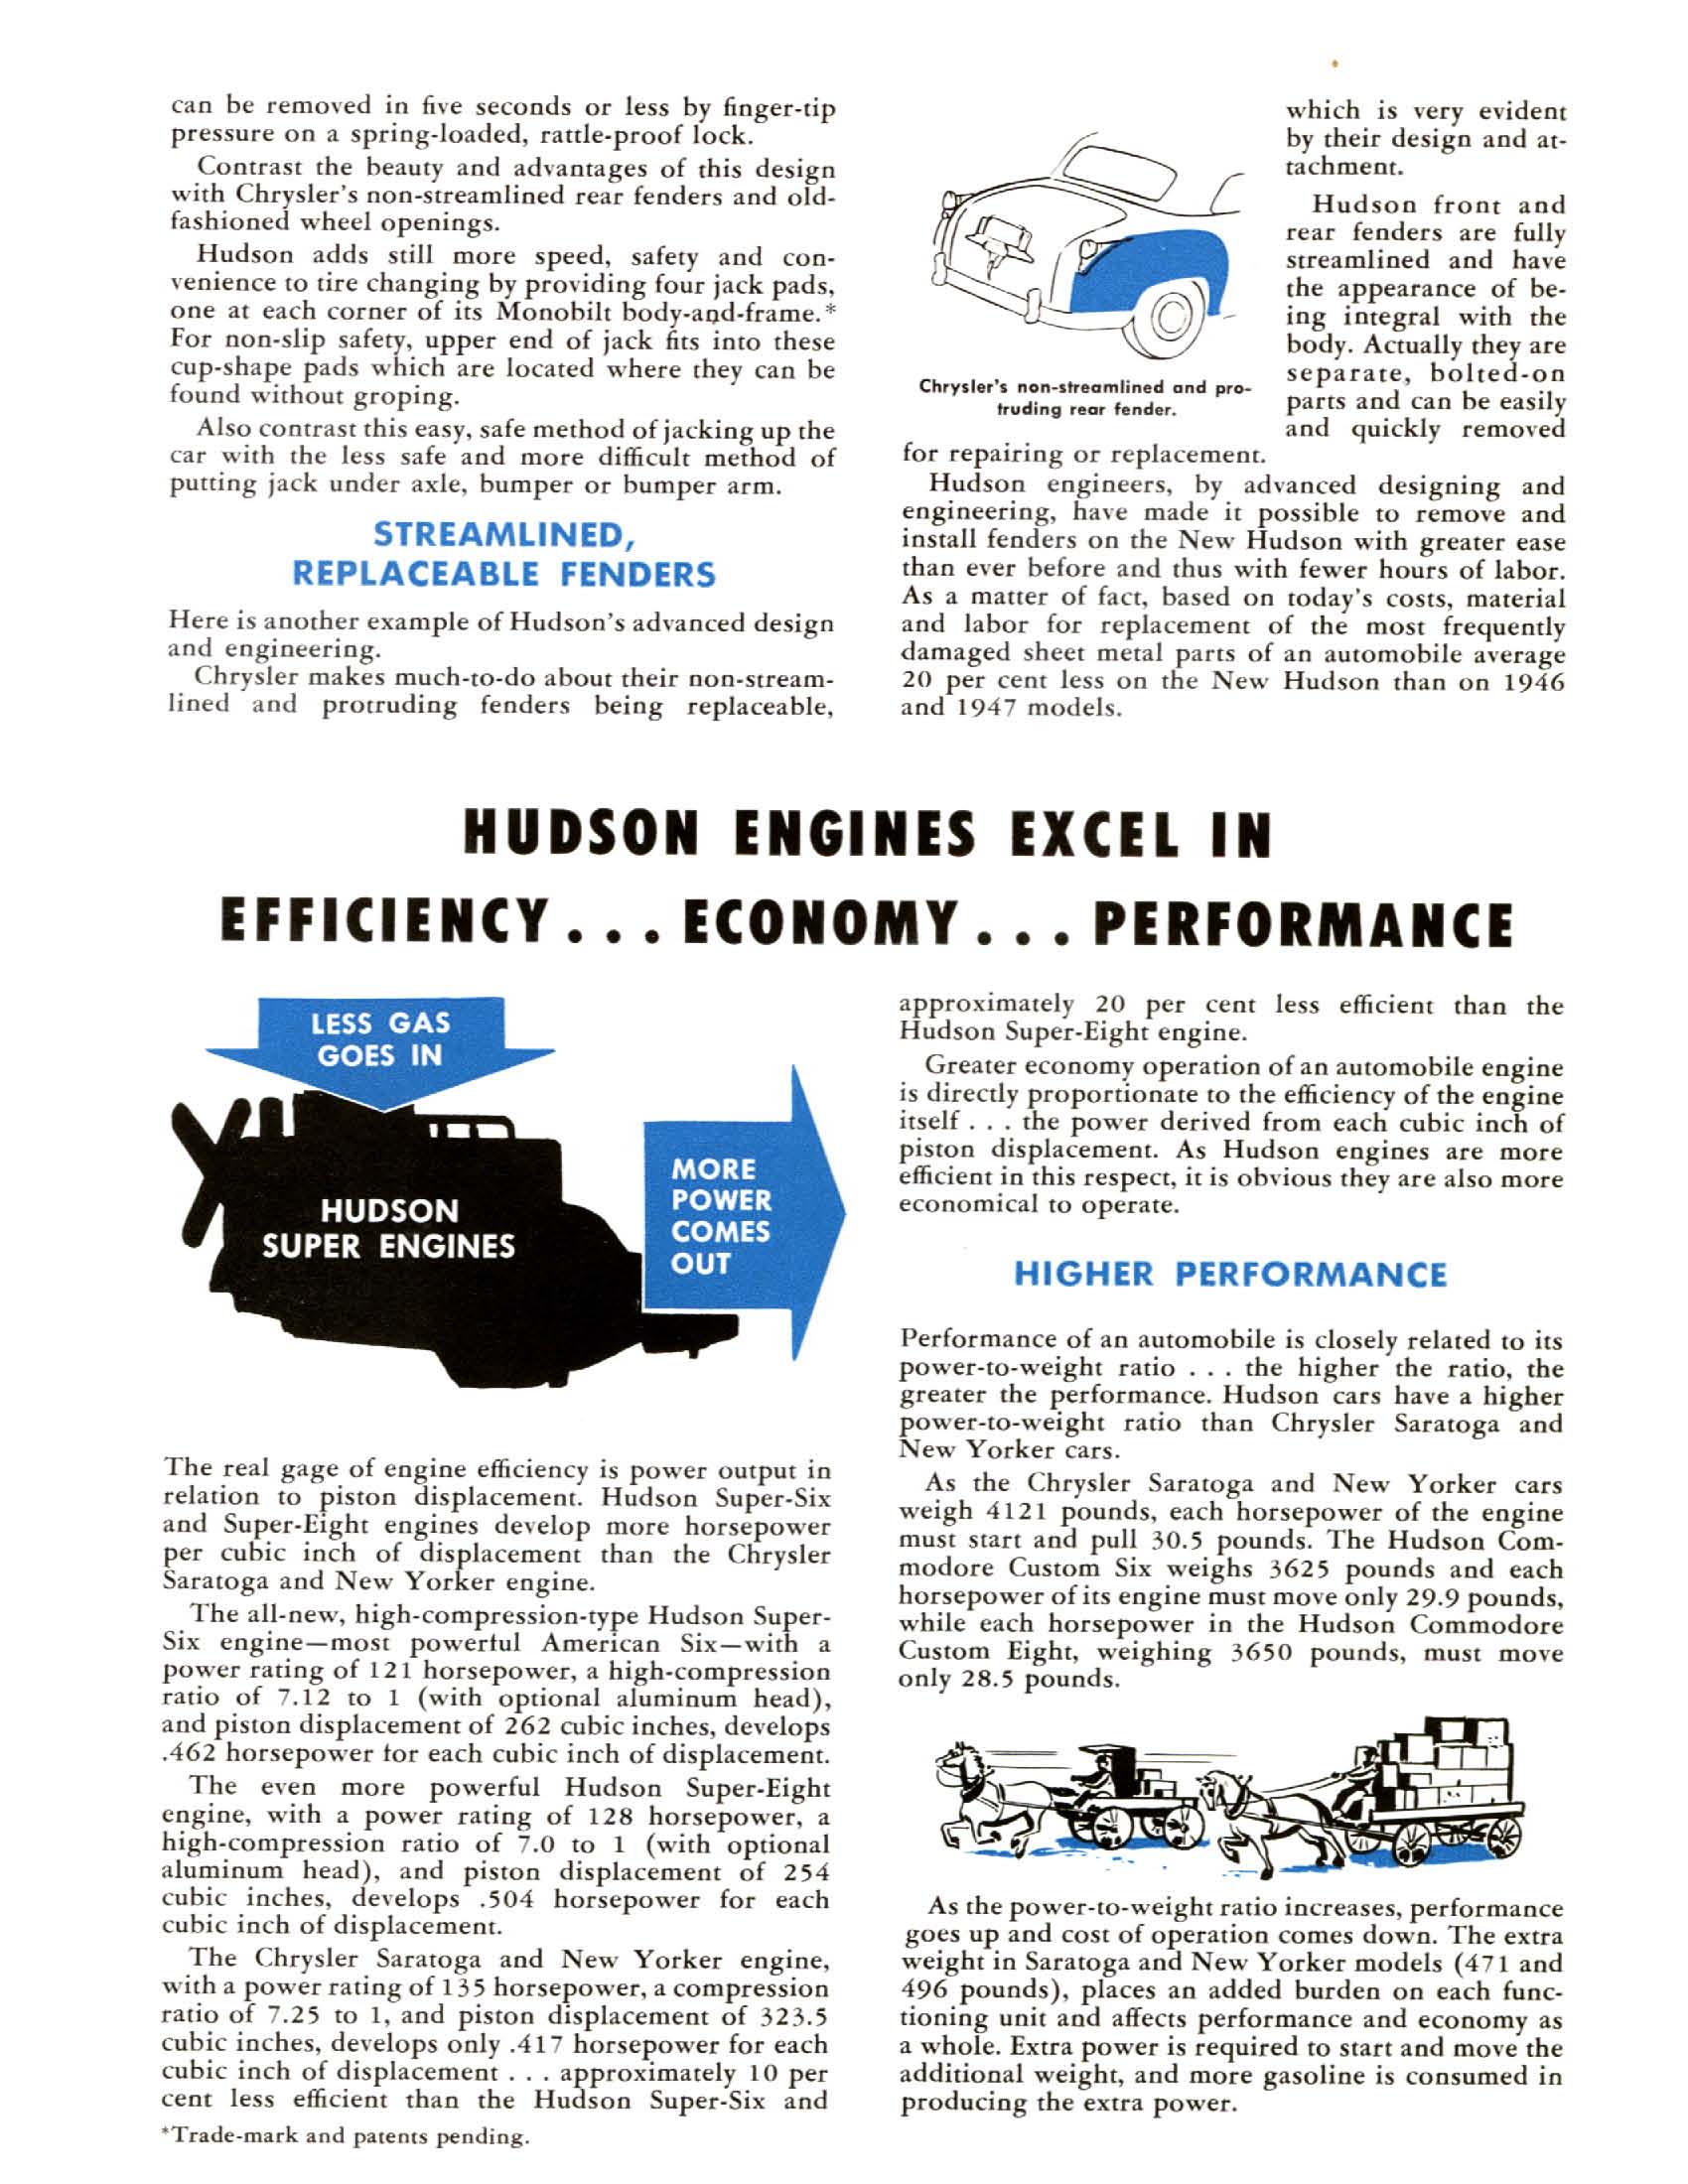 1949 Hudson vs Chrysler Saratoga-04